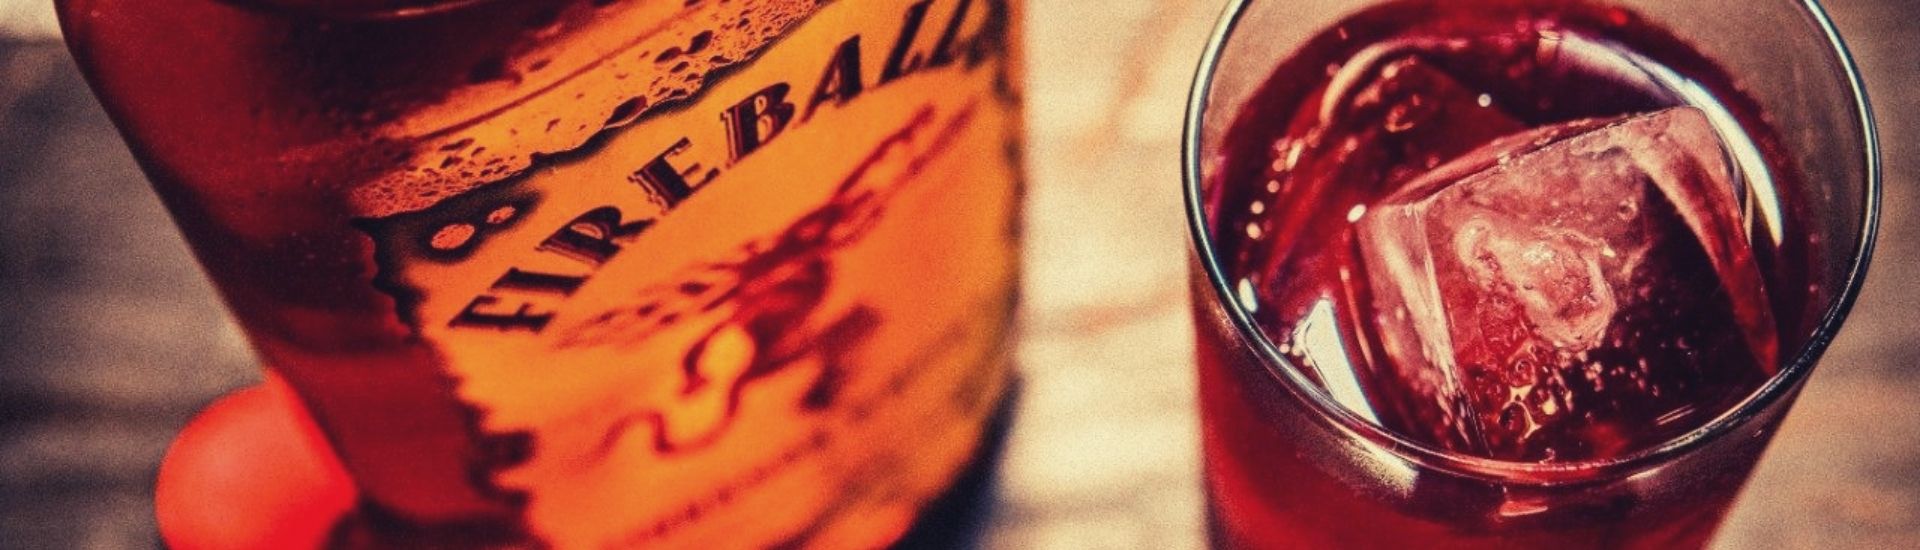 fireball cinnamon whisky on glass